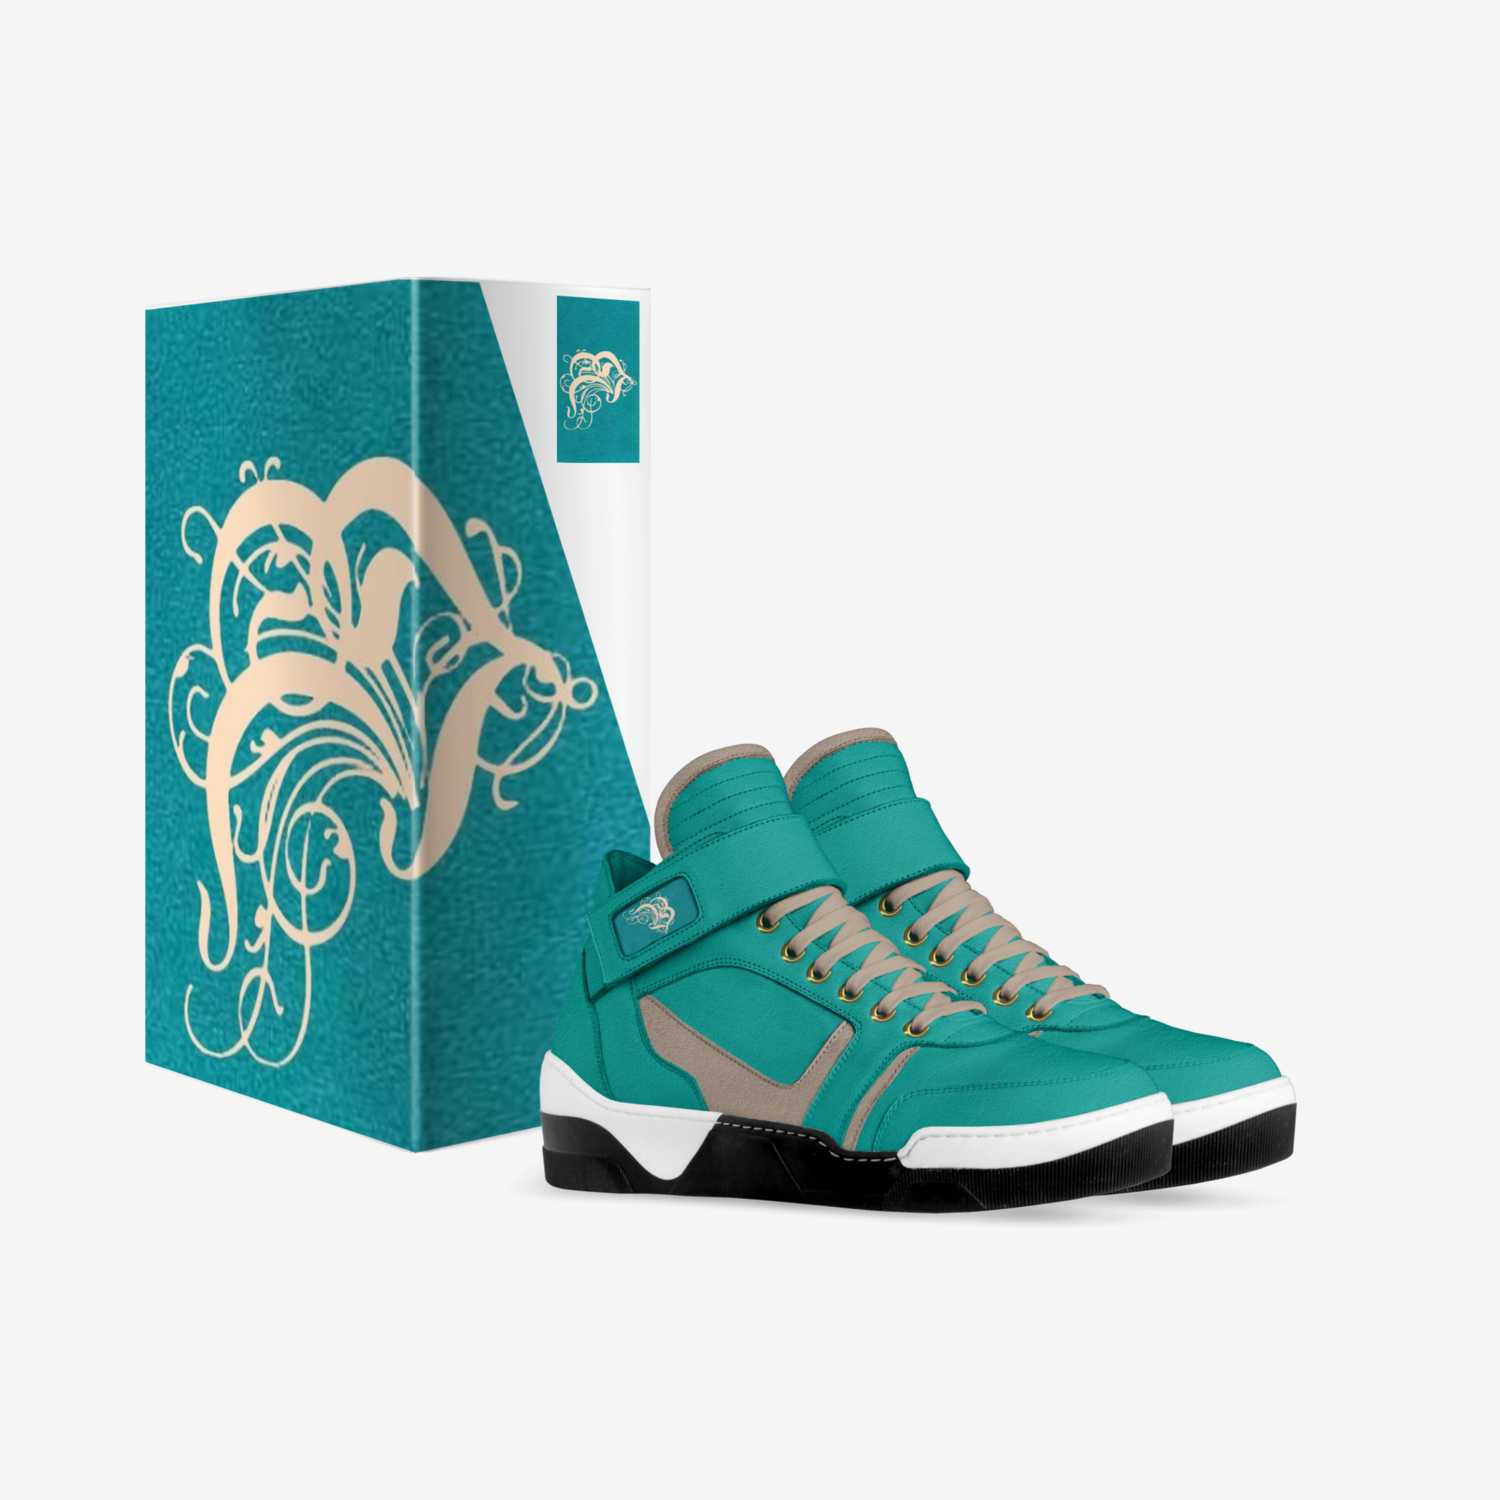 Odyssey-Aquatic custom made in Italy shoes by Garrett Berlier | Box view